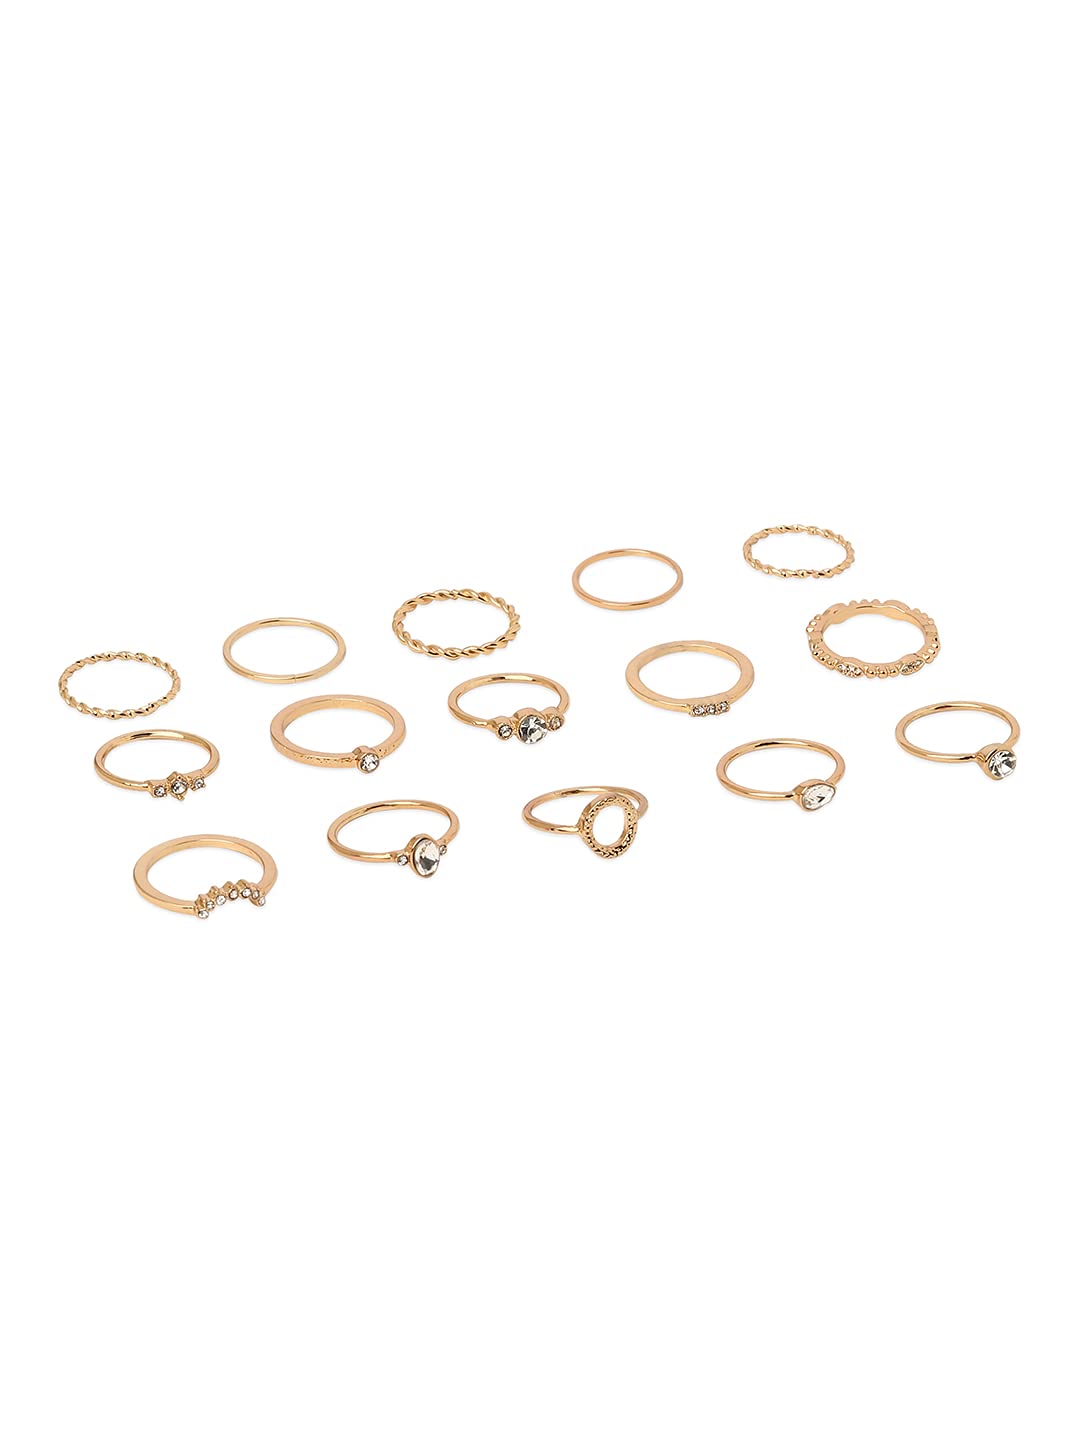 ZAVERI PEARLS Gold Tone Set Of 15 Stunning Stackable Finger Rings-Zpfk10875